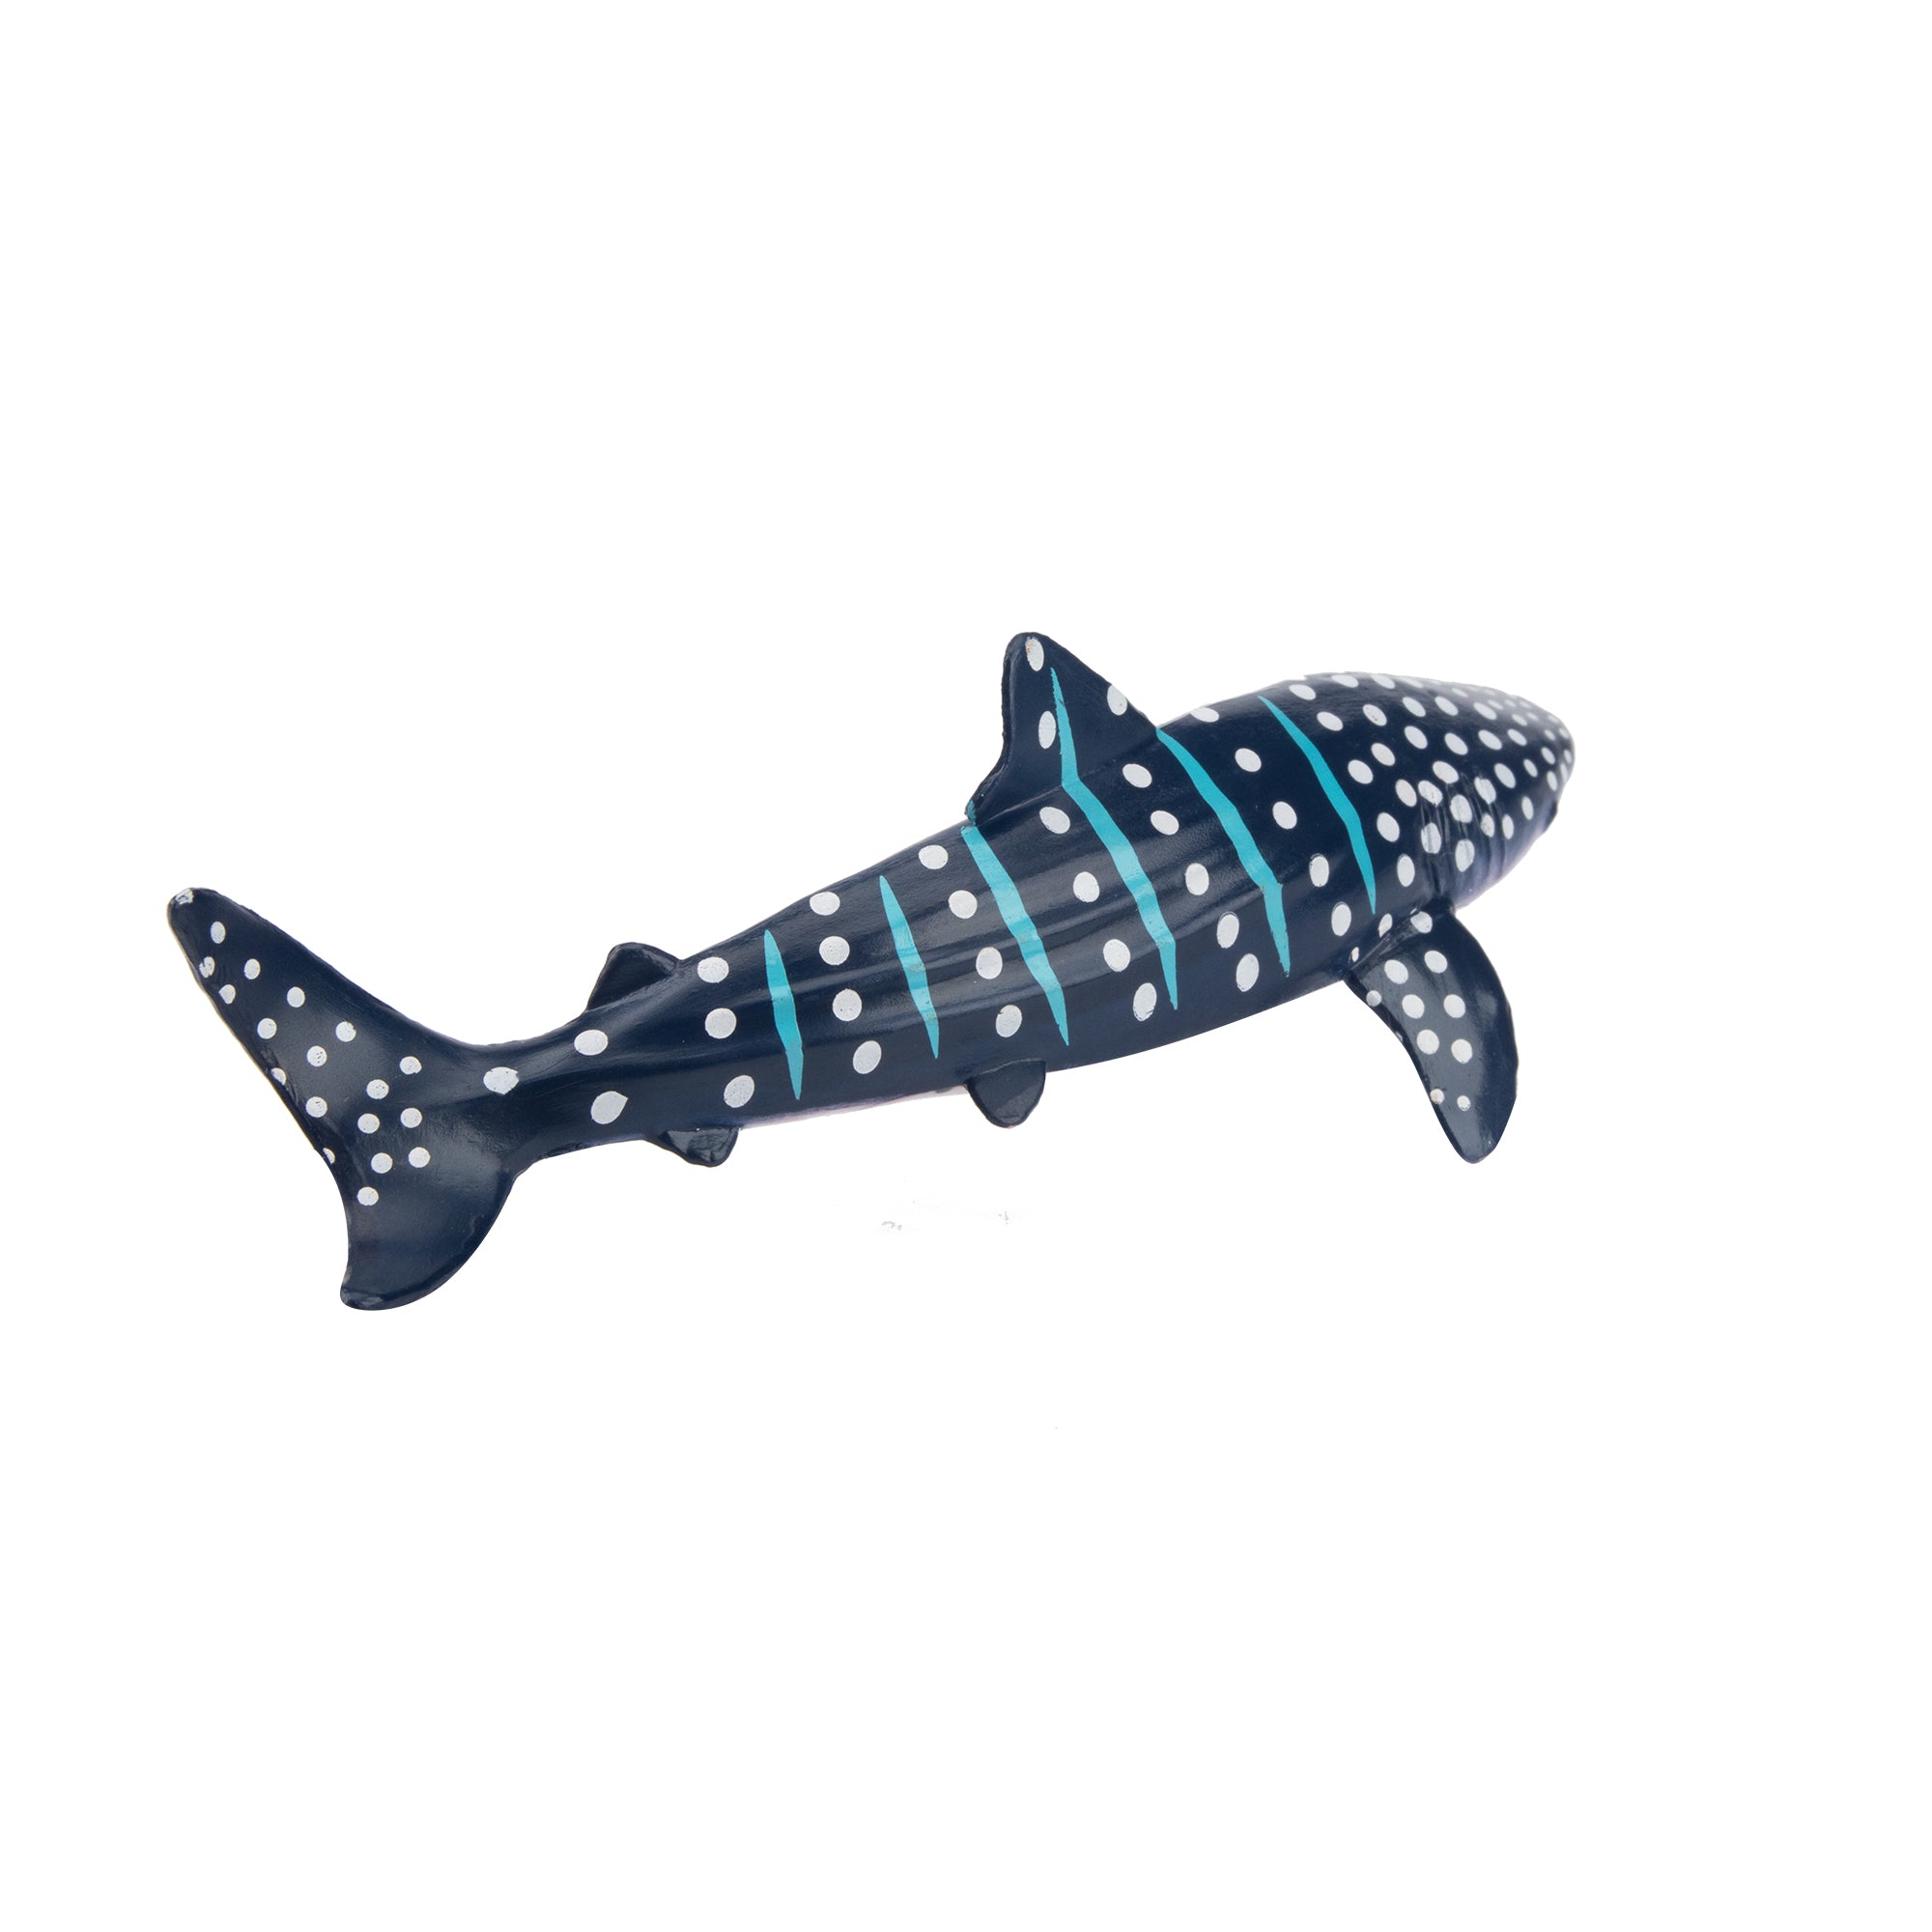 Toymany Small Size Whale Shark Figurine Toy-2